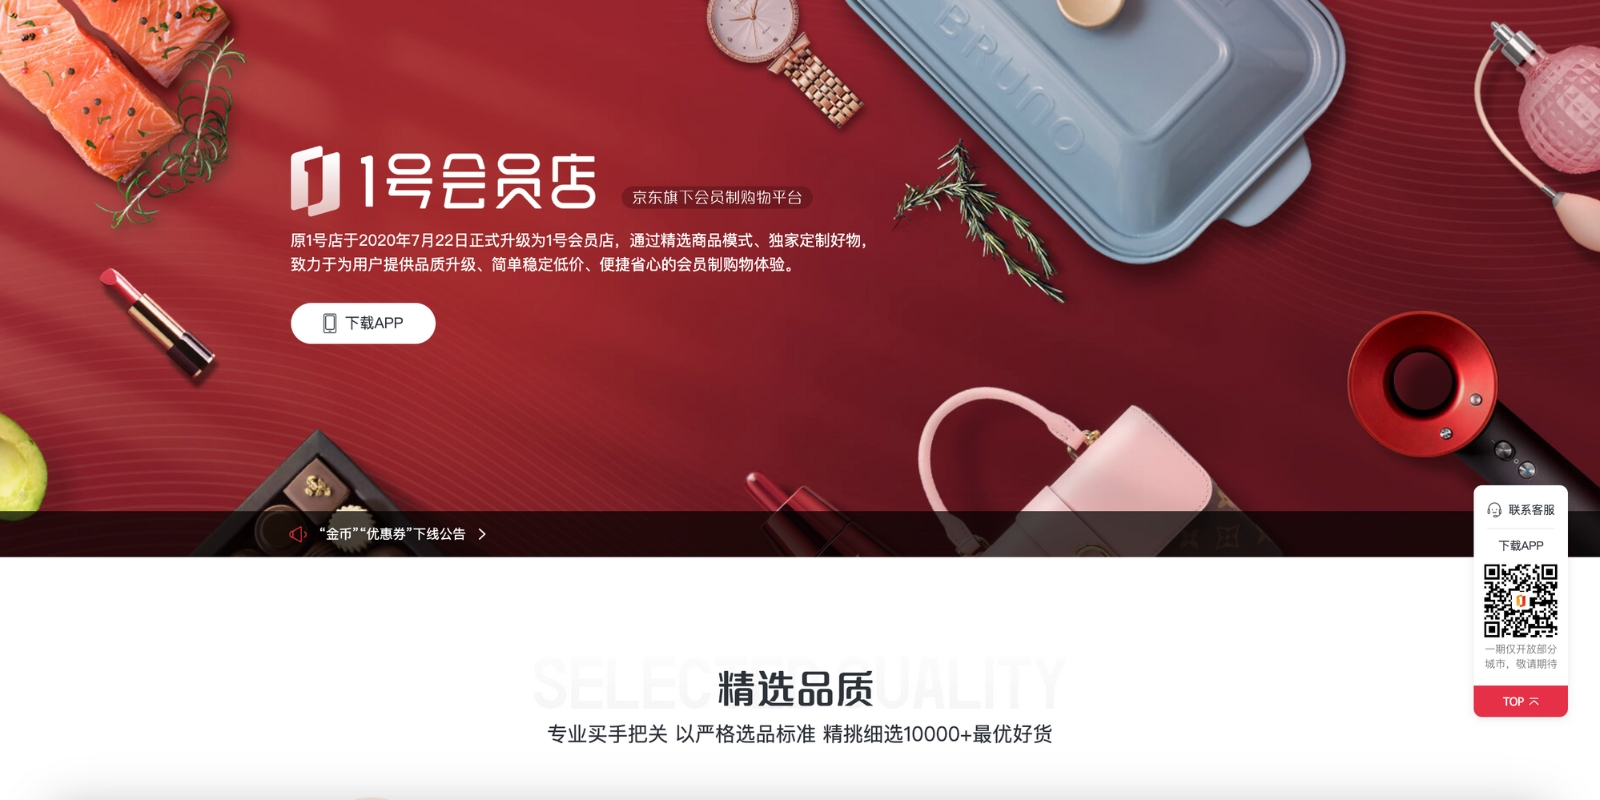 Yihaodian main page web view